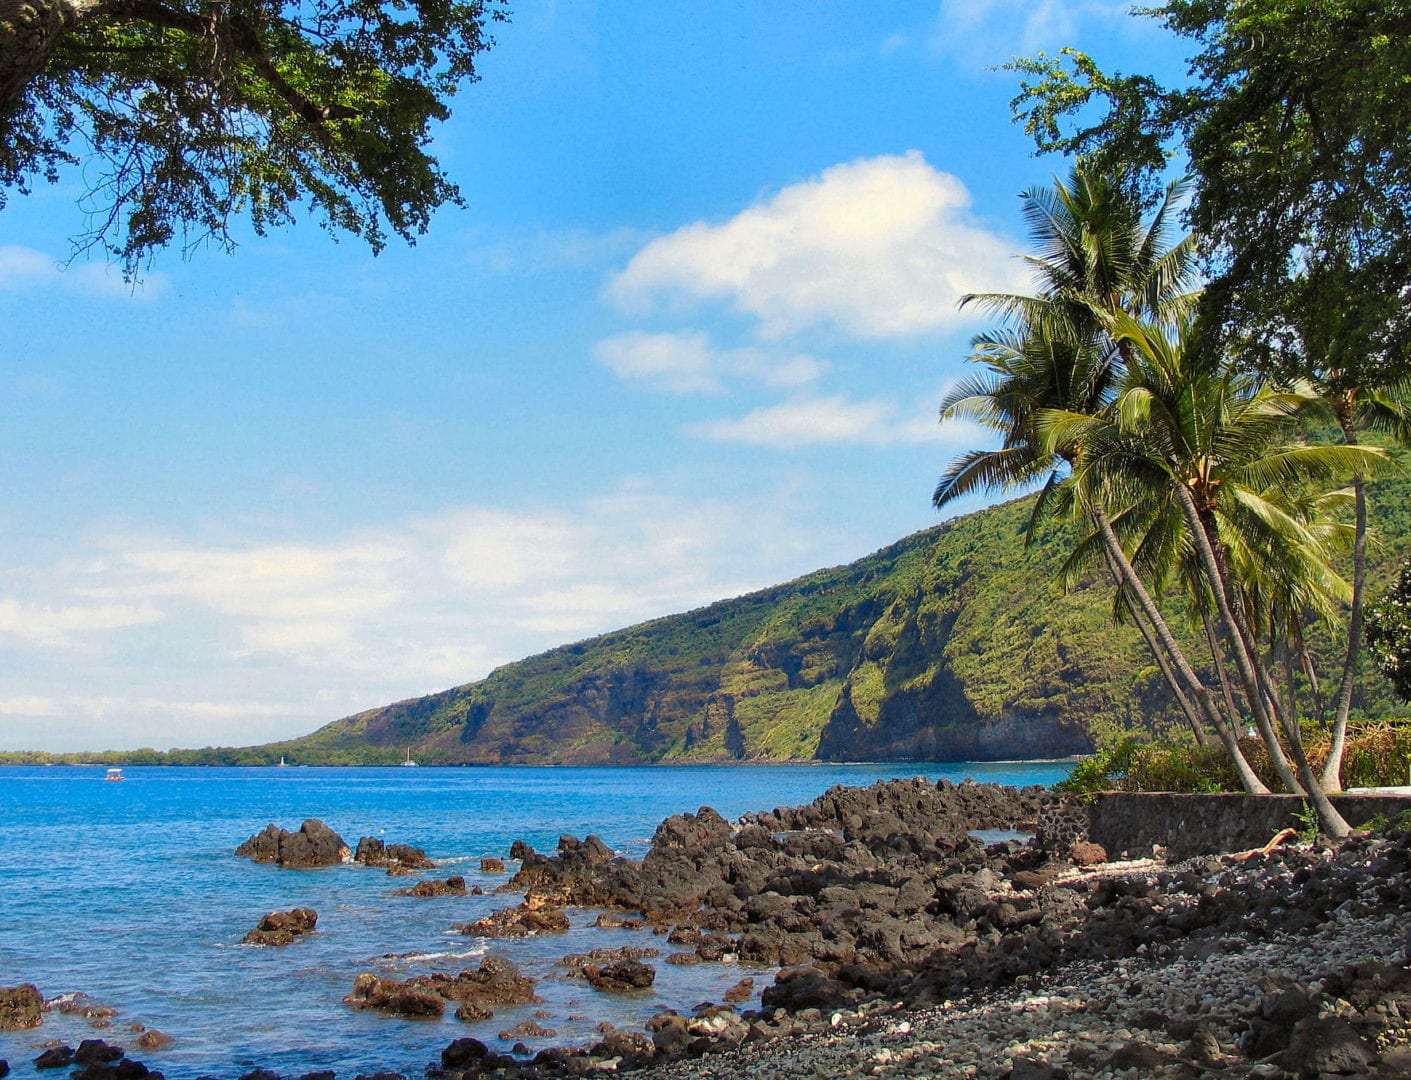 A rocky shore in Hawaii